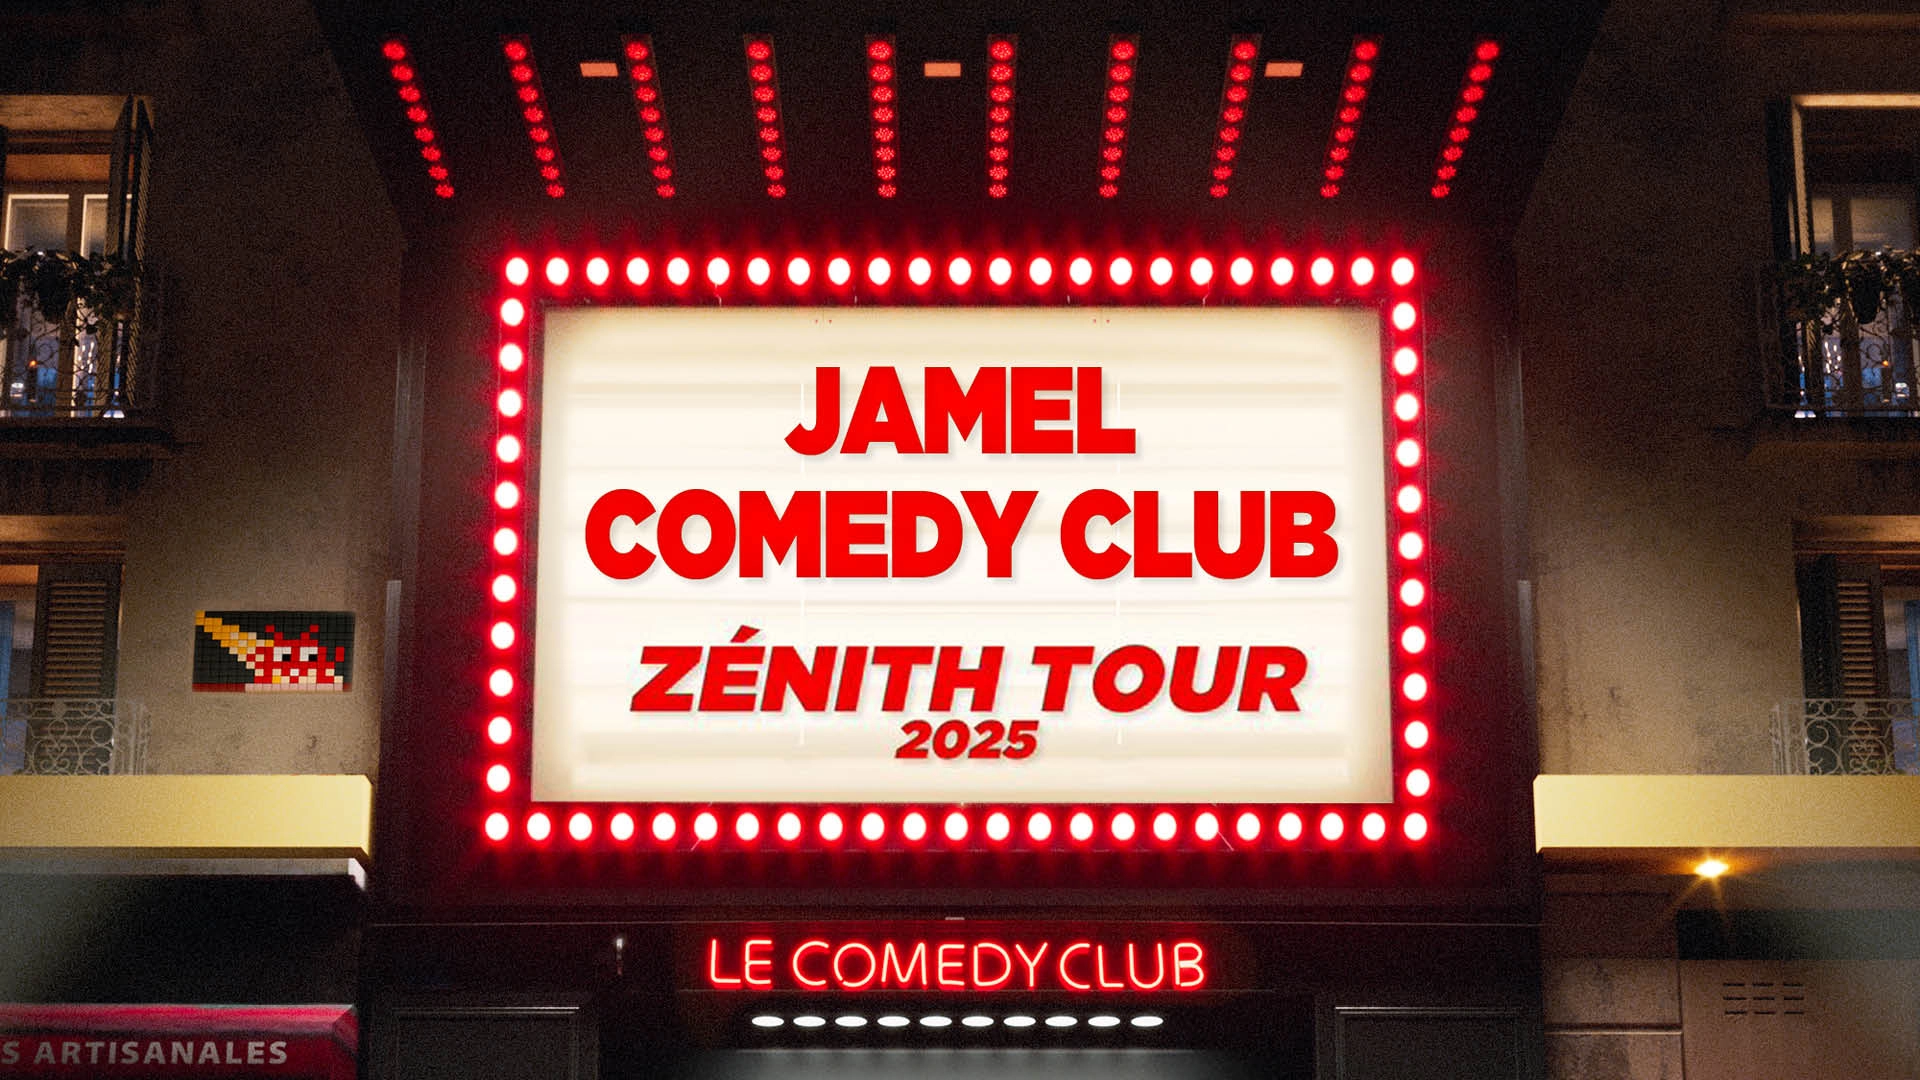 Jamel Comedy Club Zenith Tour 2025 en Zenith Pau Tickets